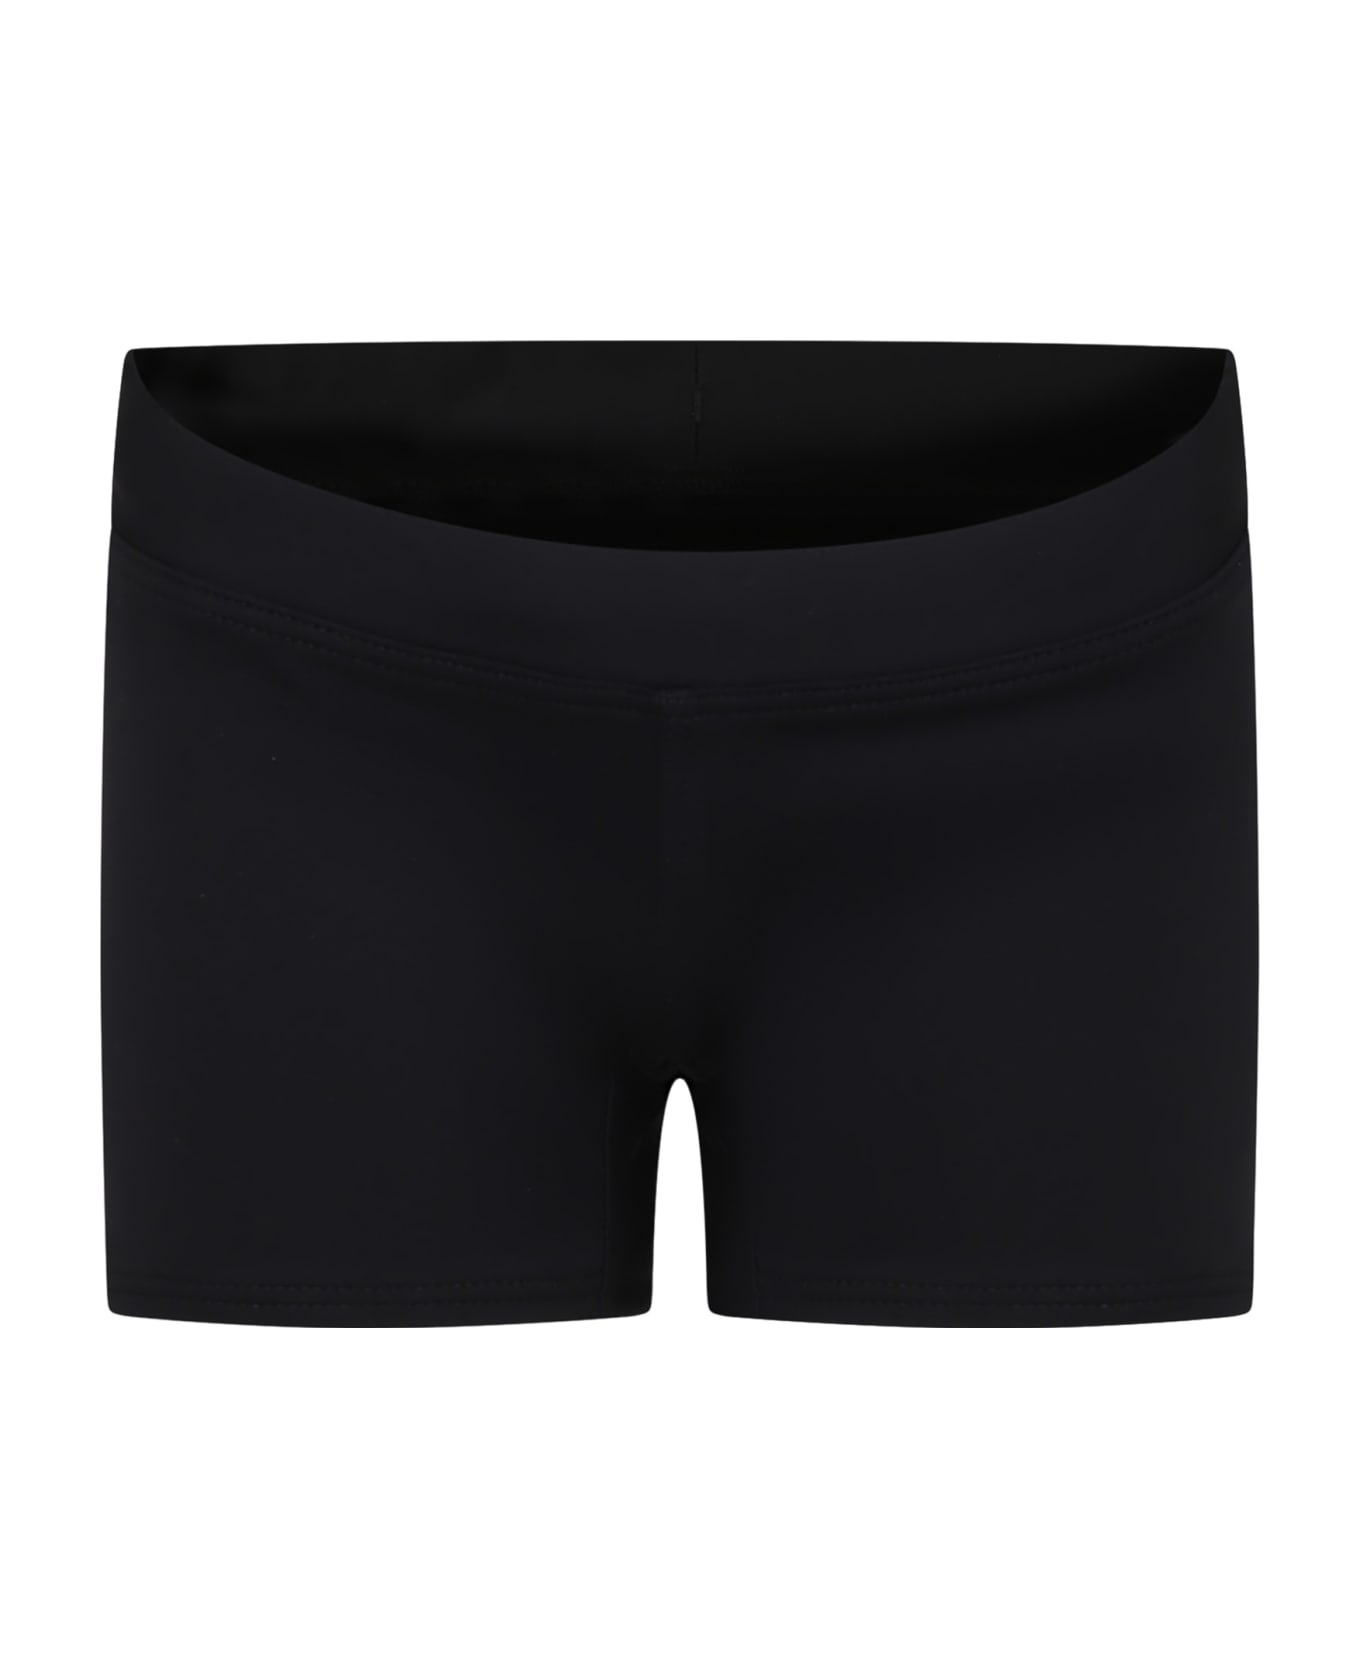 Calvin Klein Black Swim Shorts For Boy With Logo - Black